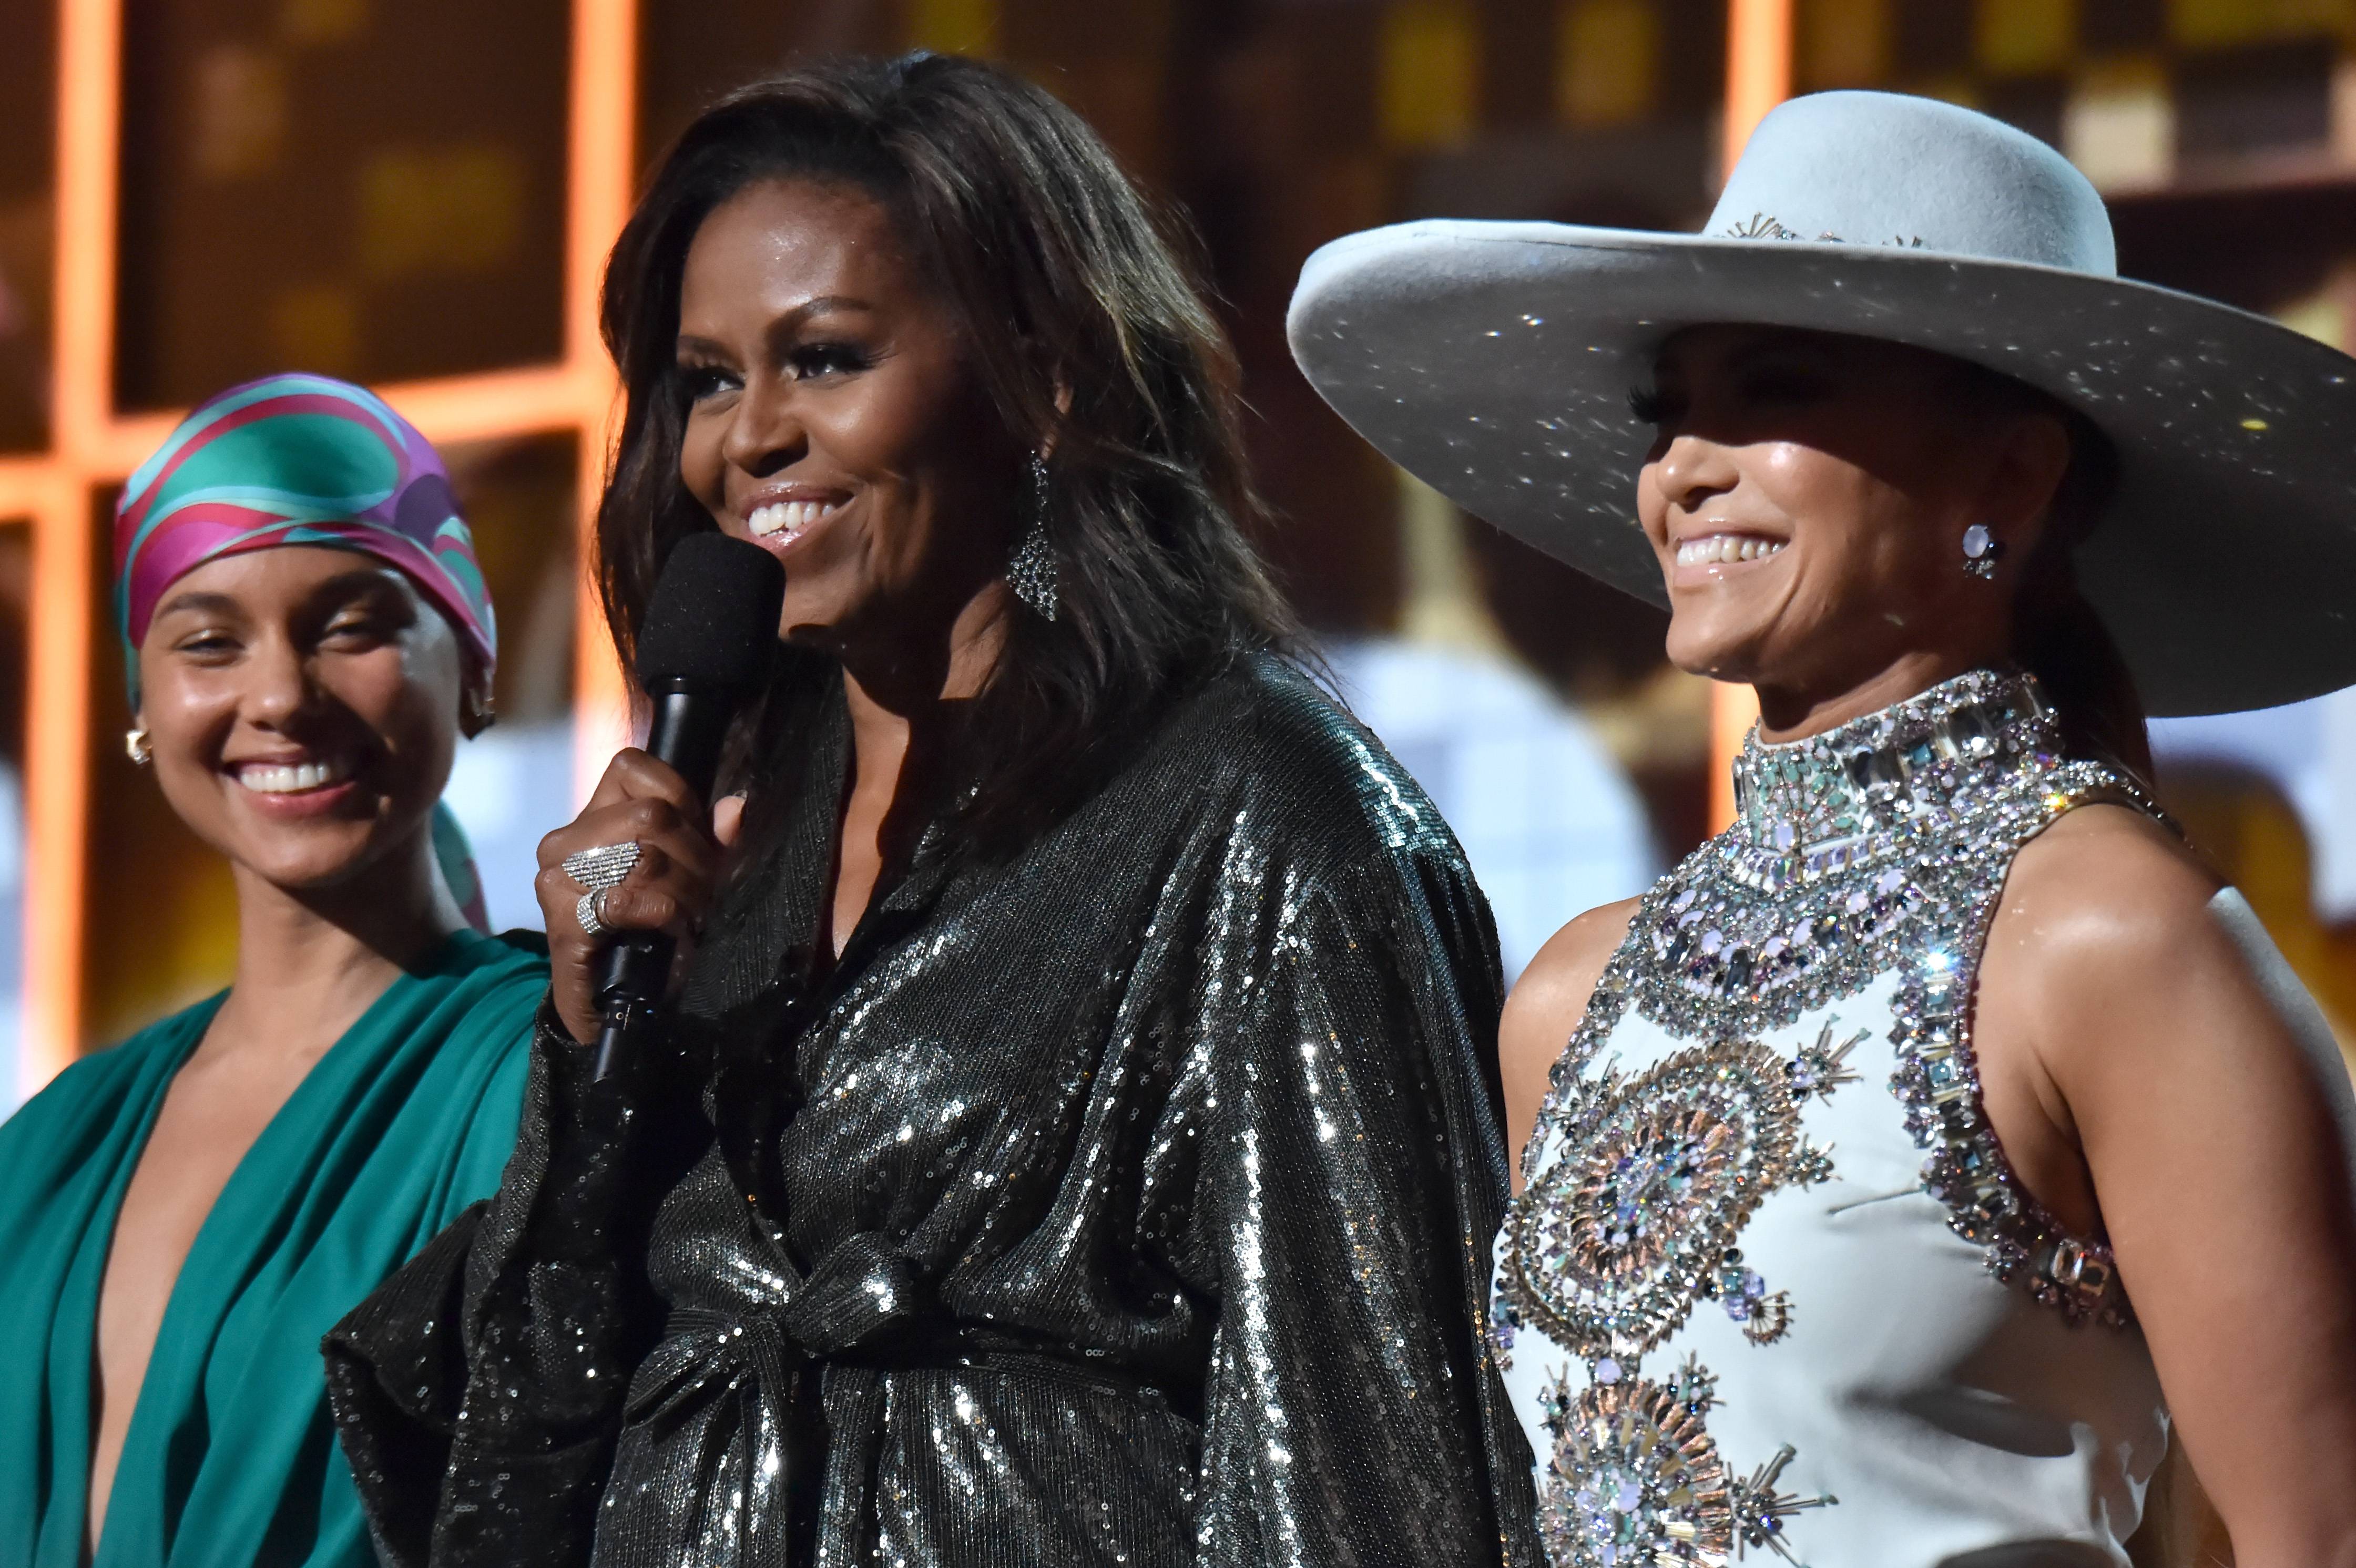 Grammys 2019: Alicia Keys Opens Show With Michelle Obama, Lady Gaga